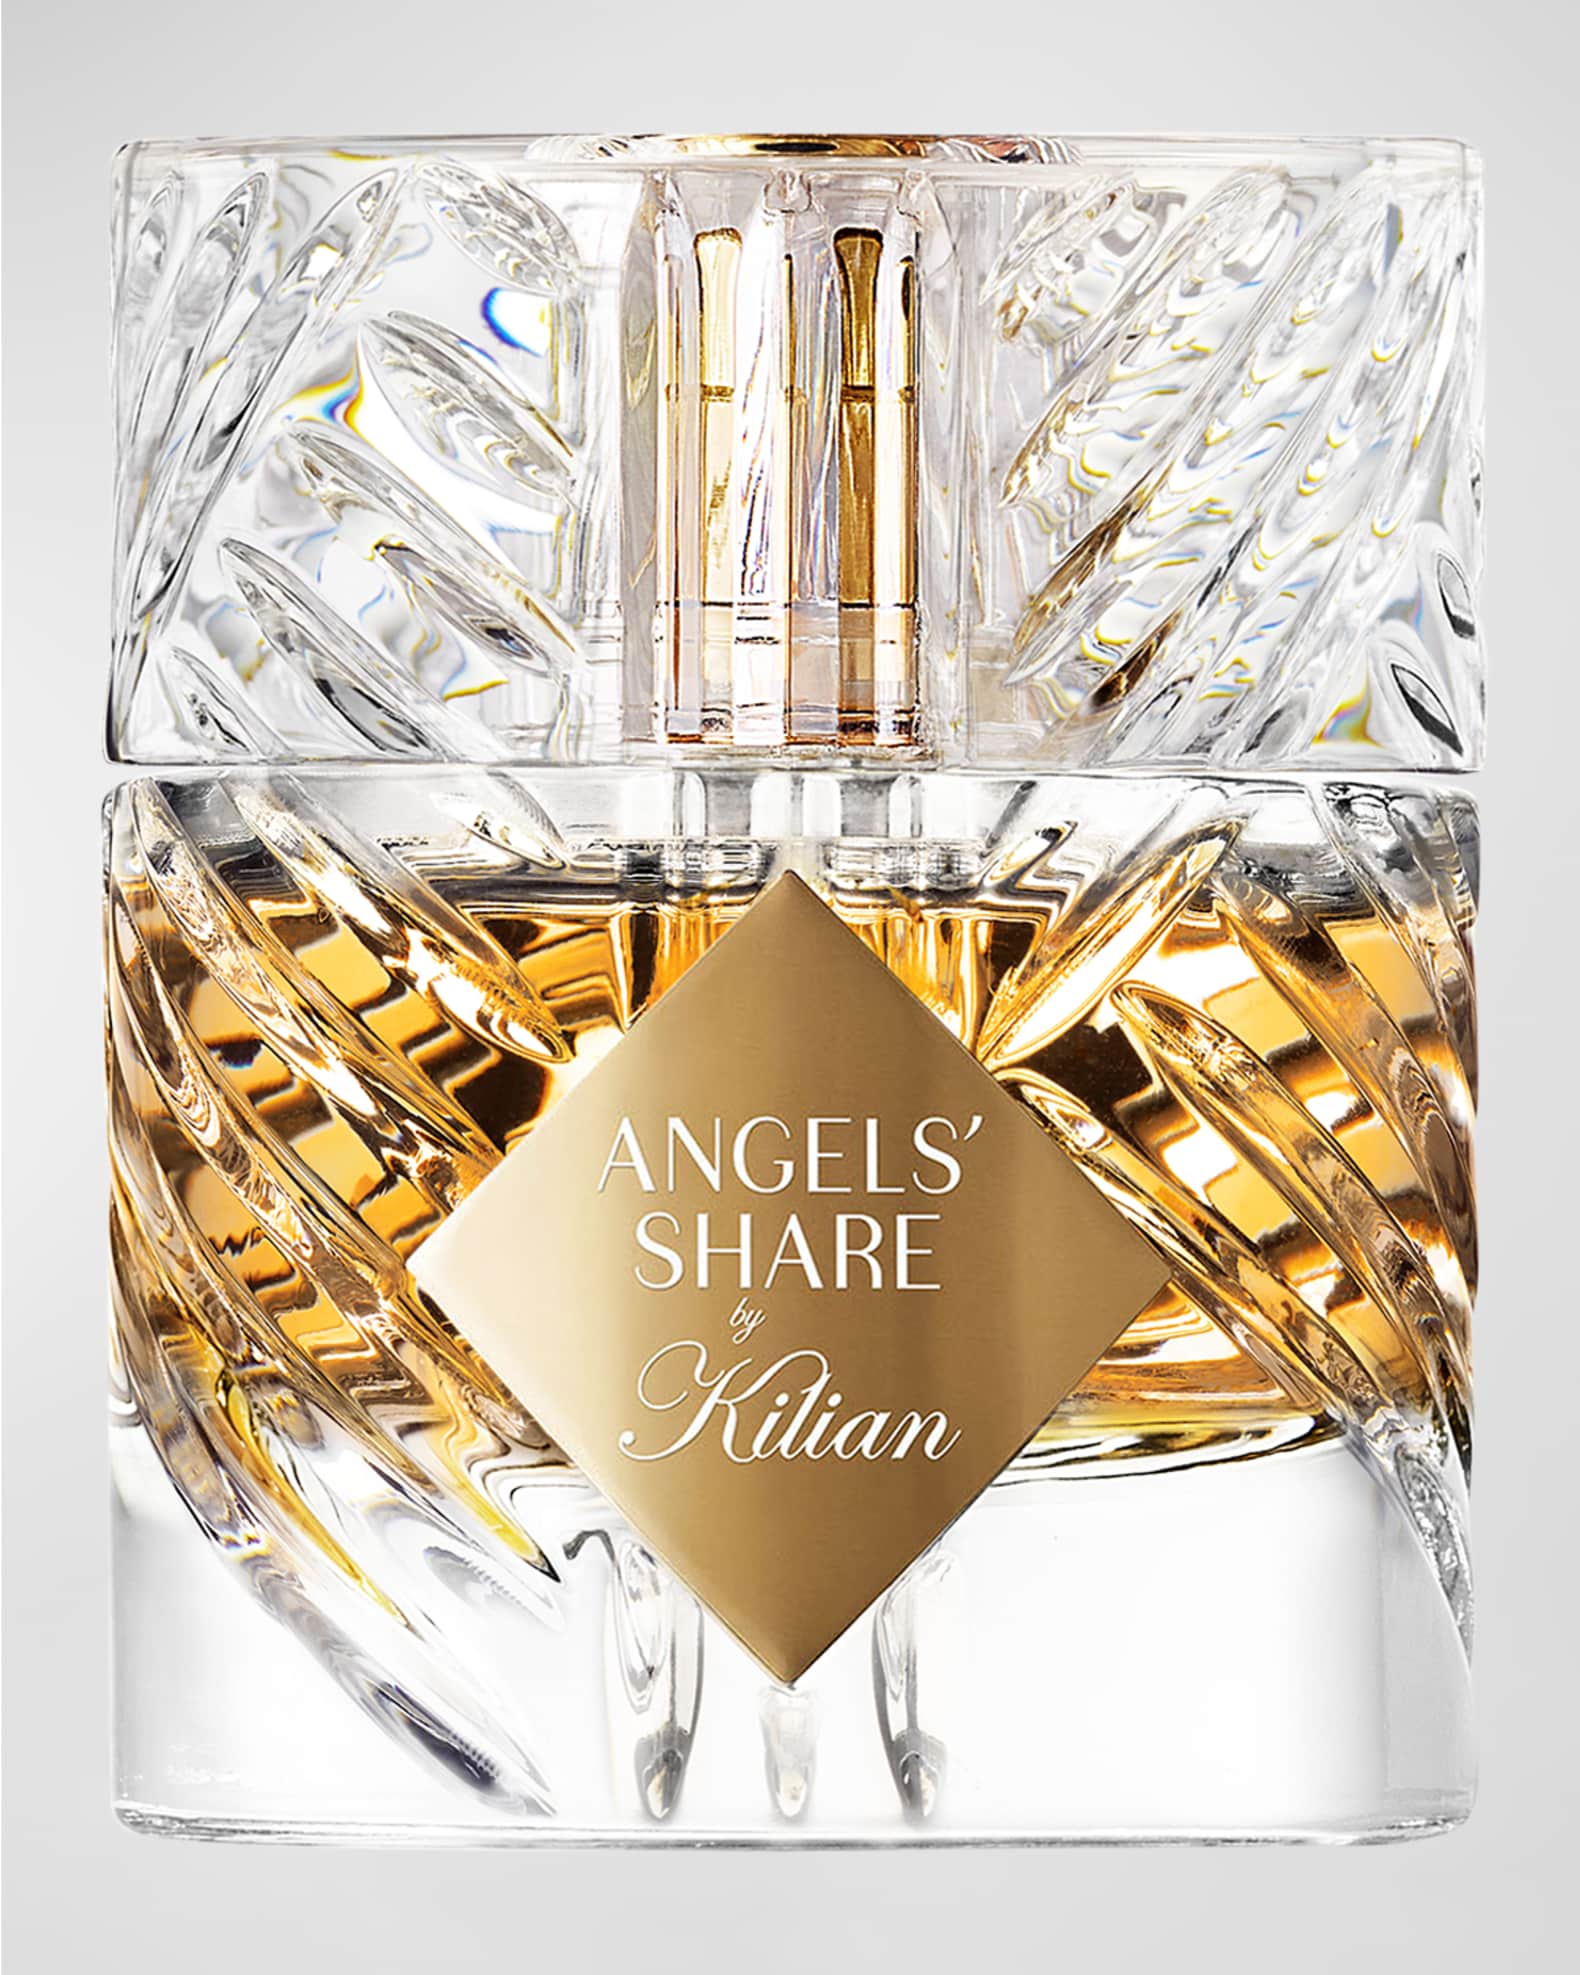 Buy Dream Angel 50ML Small Eau de Parfum Online